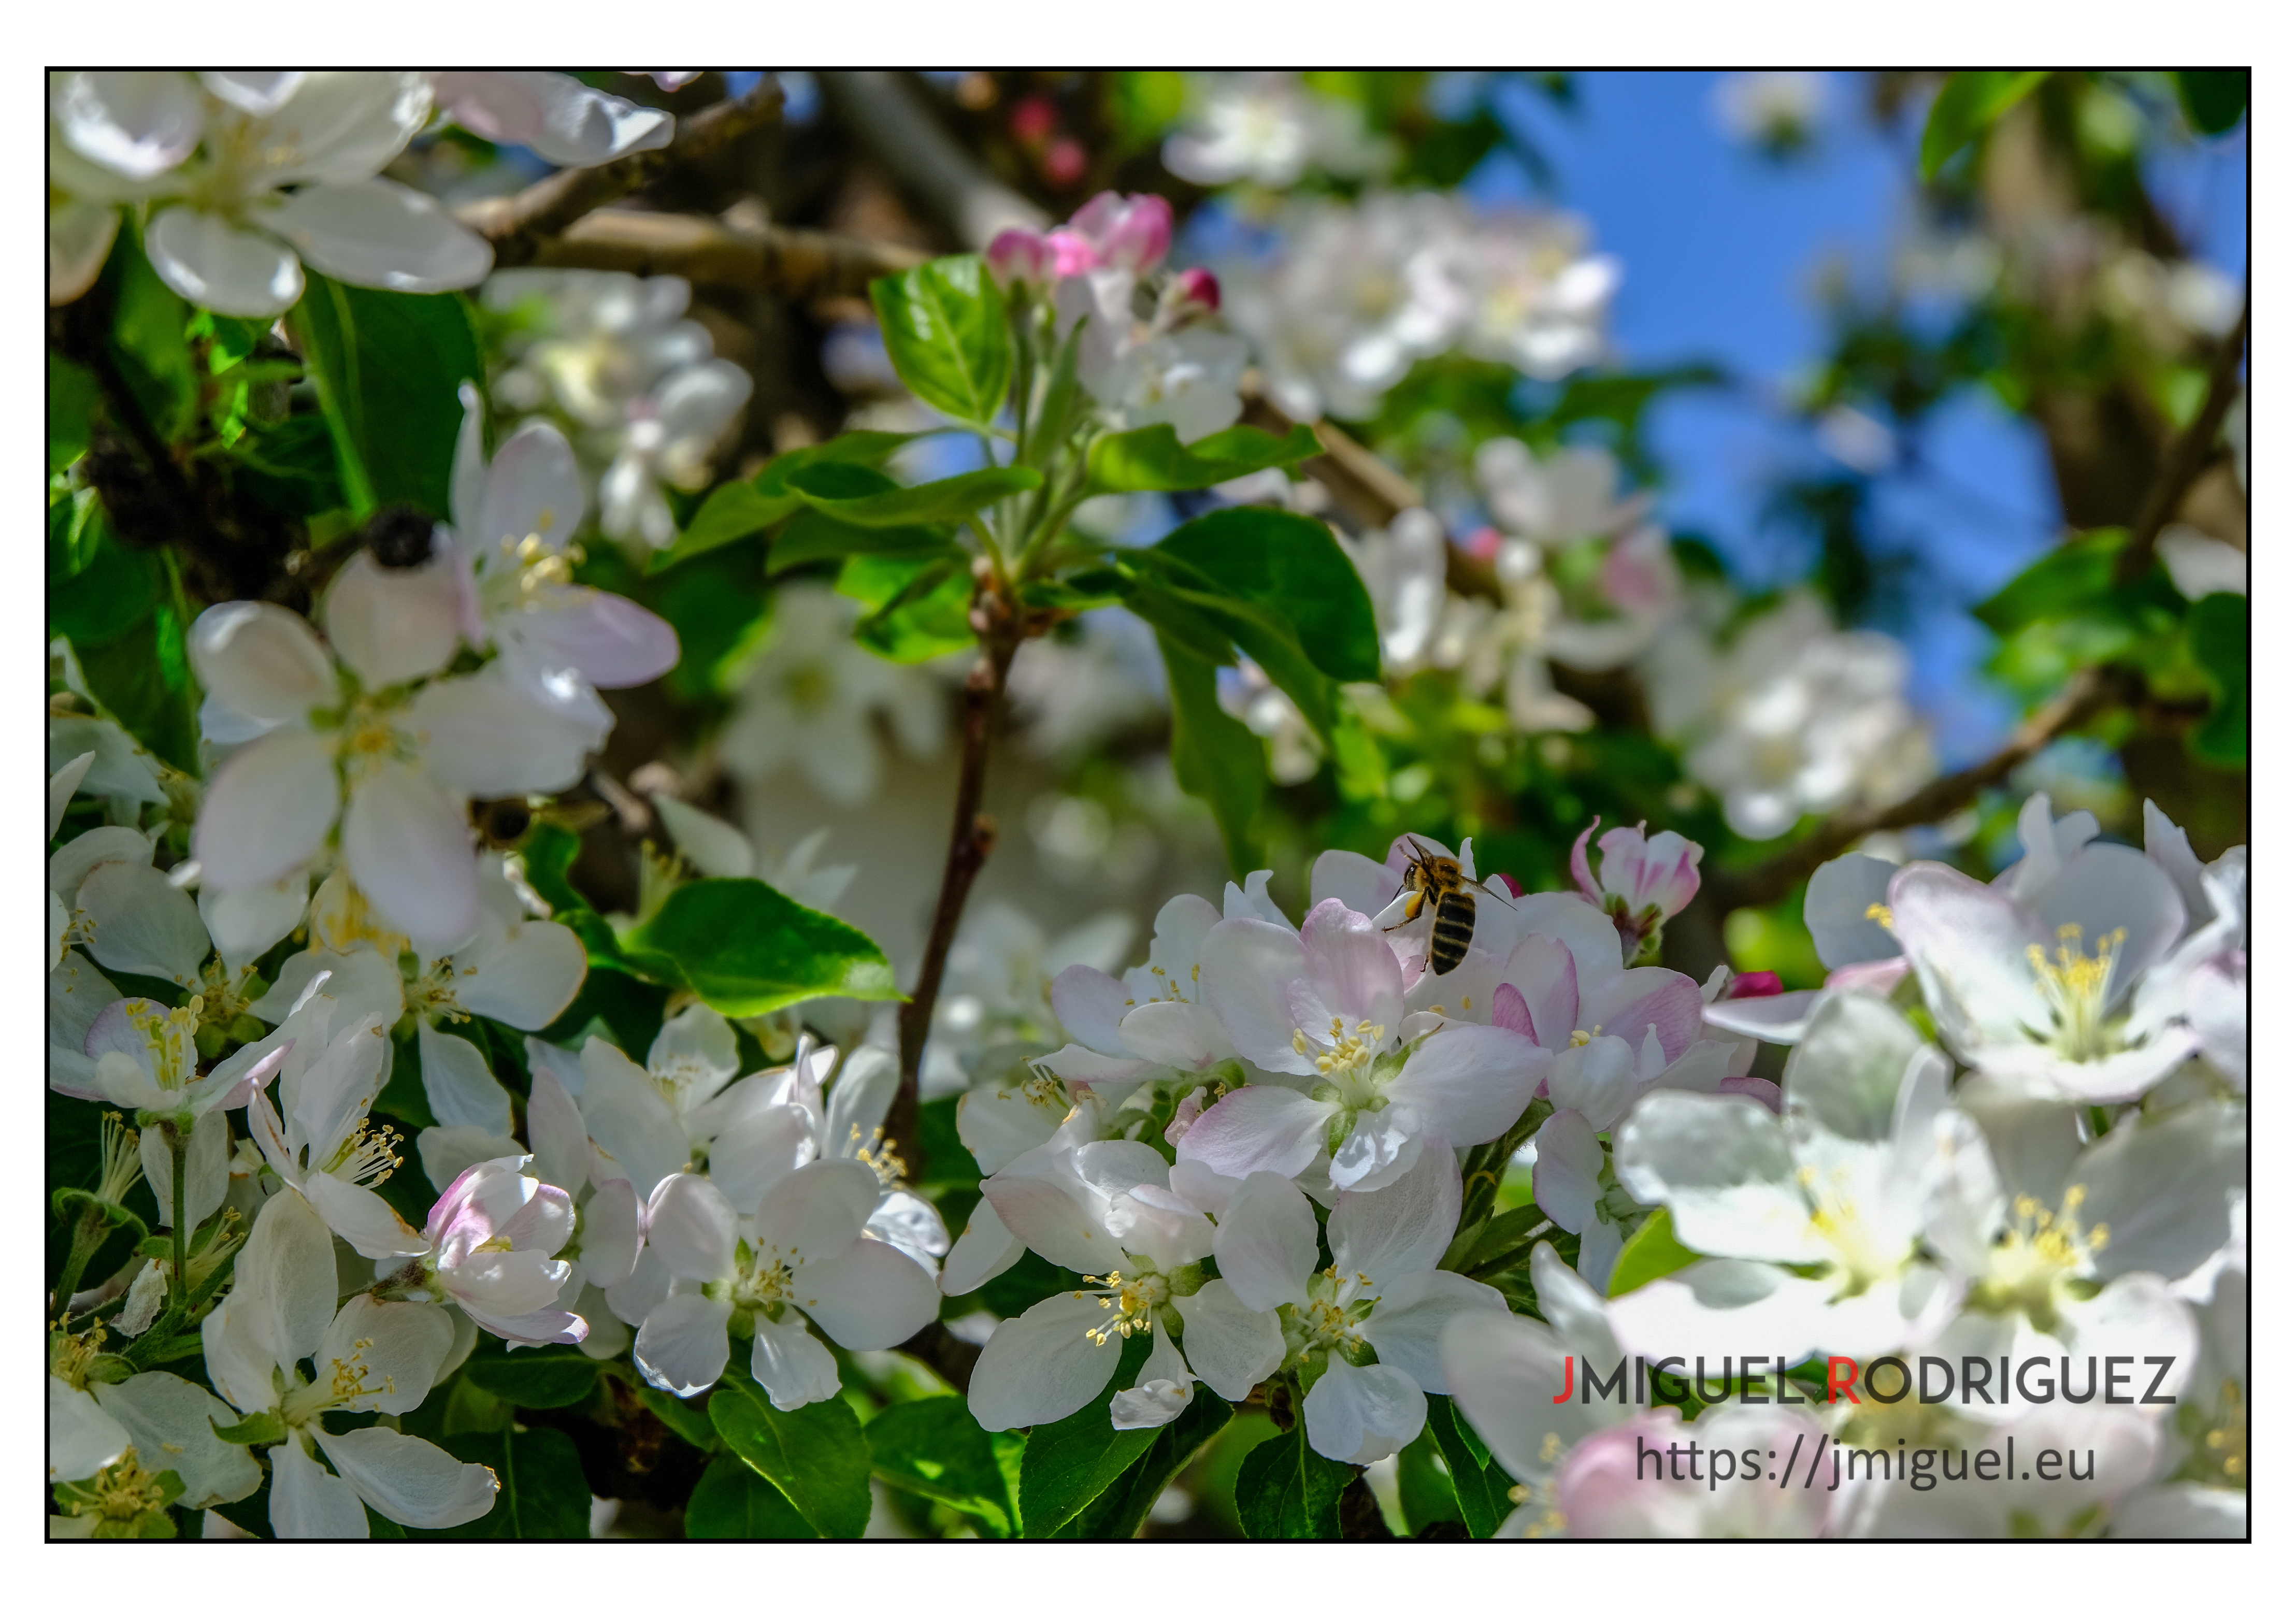 Abeja en flor de manzano silvestre